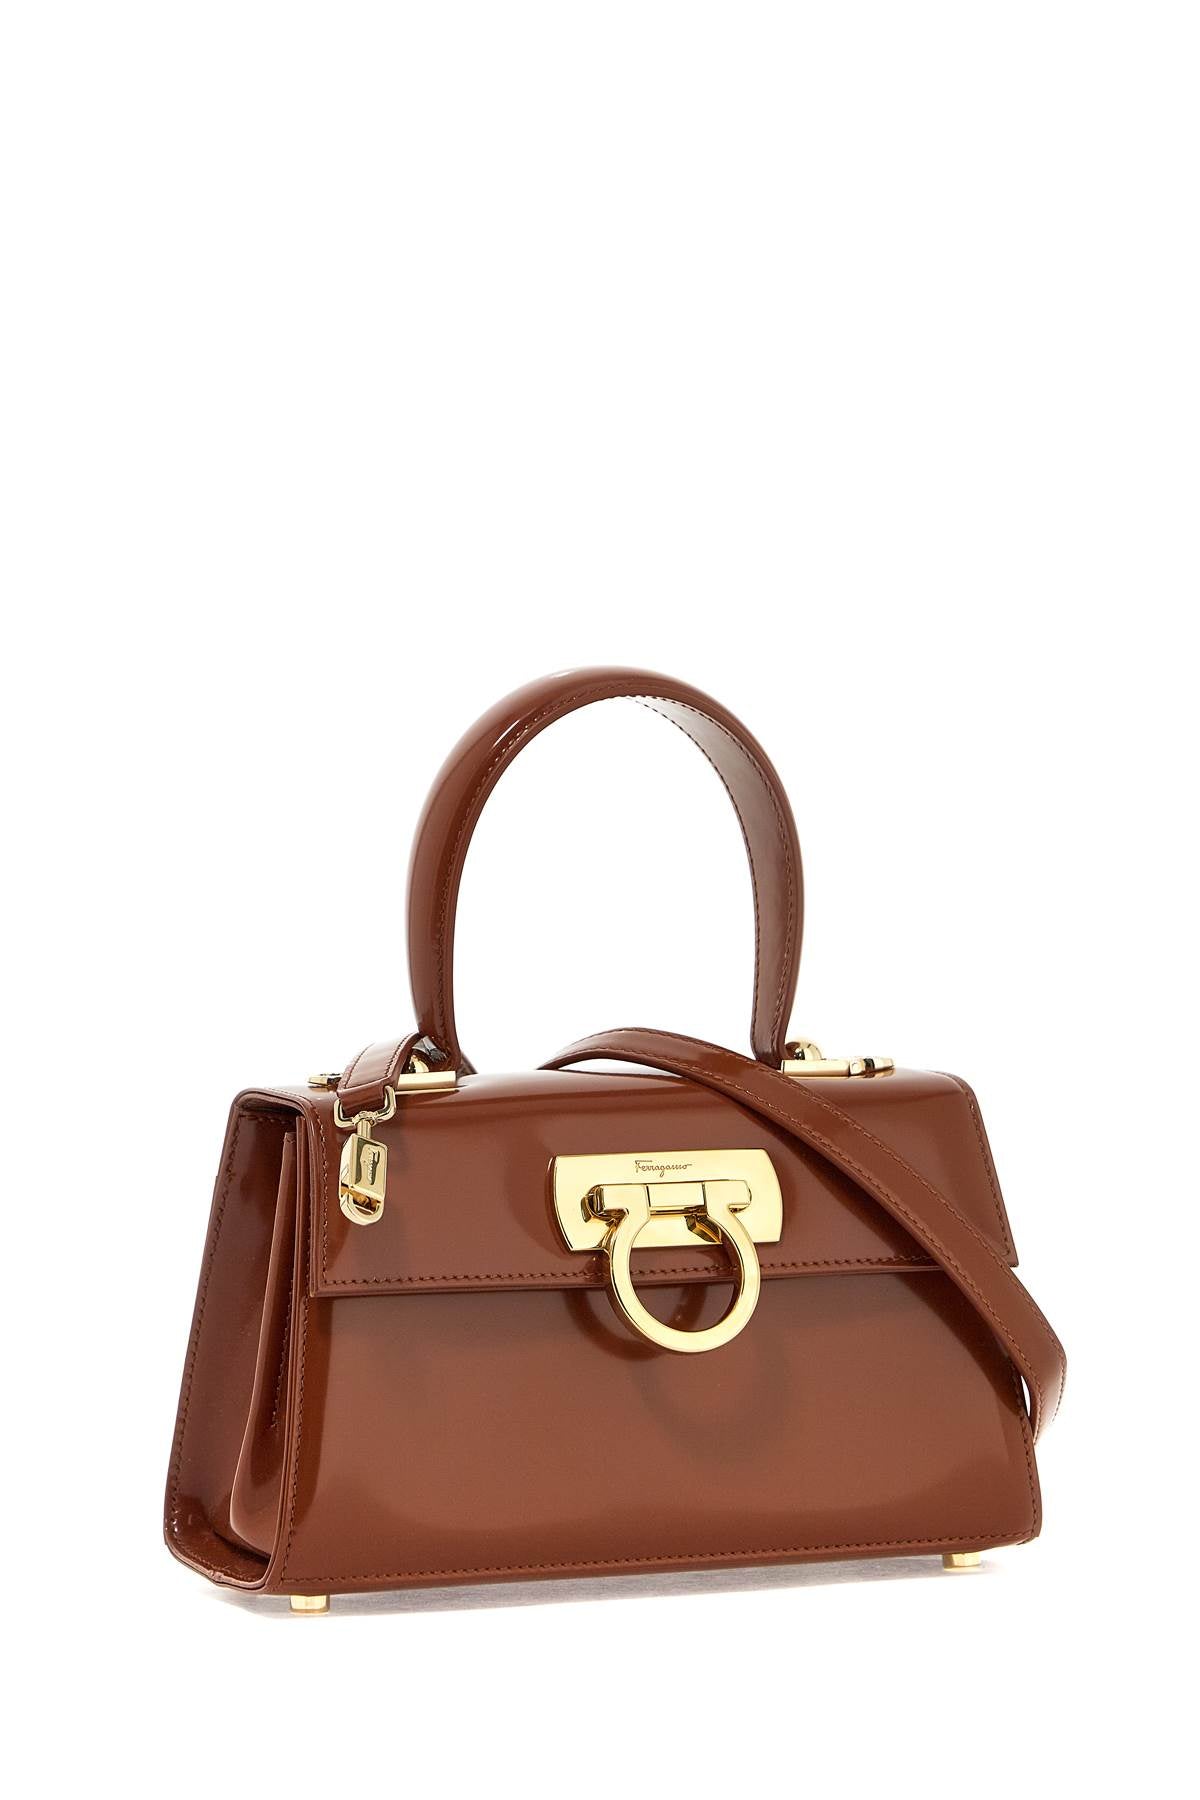 FERRAGAMO Sleek and Sophisticated Leather Handbag for Women